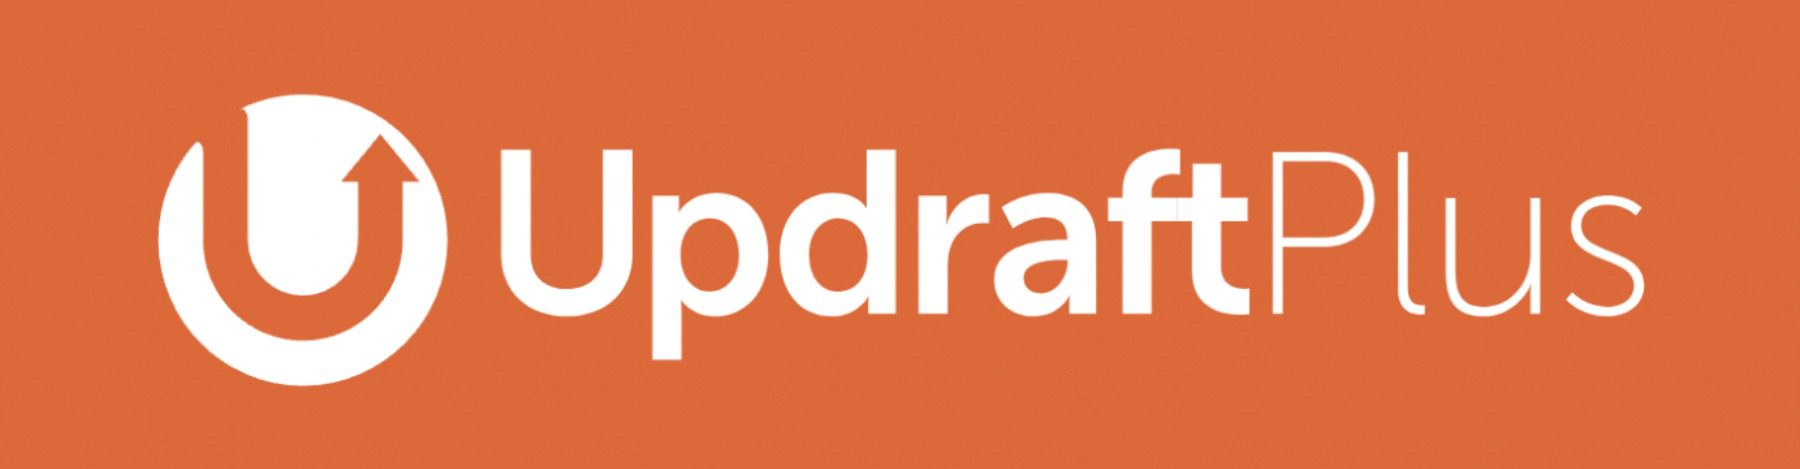 UpdraftPlus logo